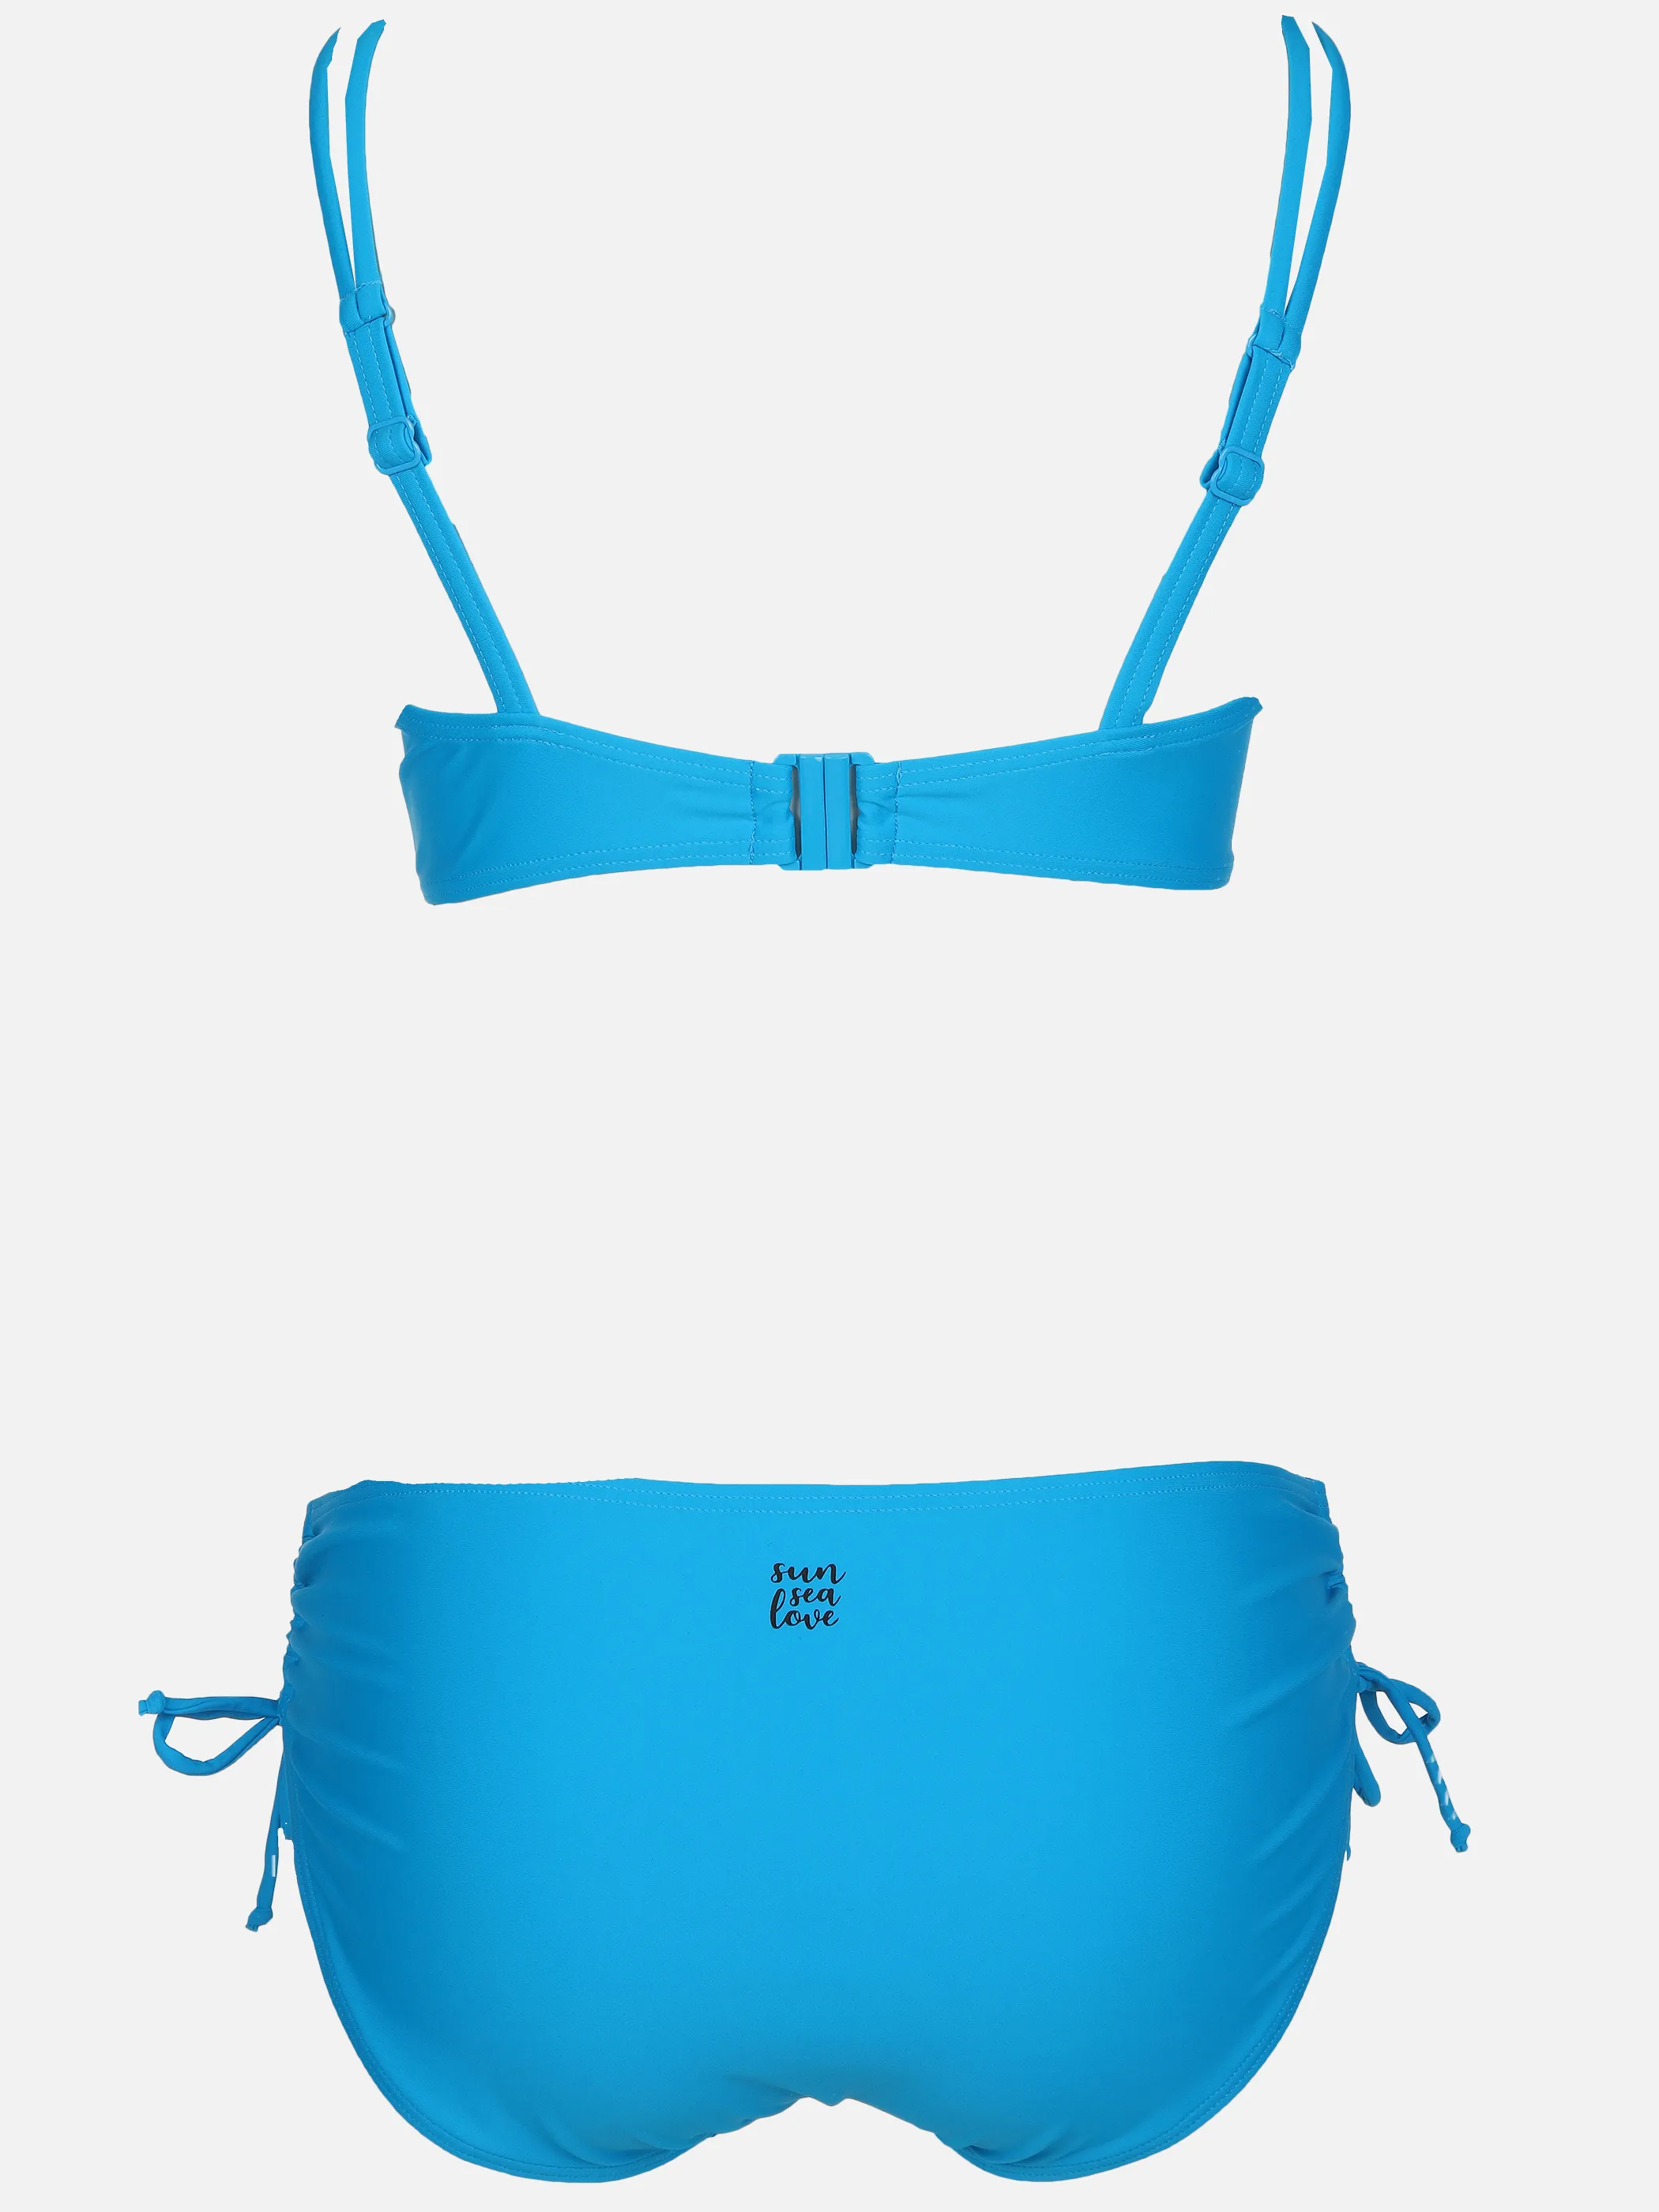 Sonja Blank D-Cup Big Size Da- Bikini Set Blau 891255 BLUE 2